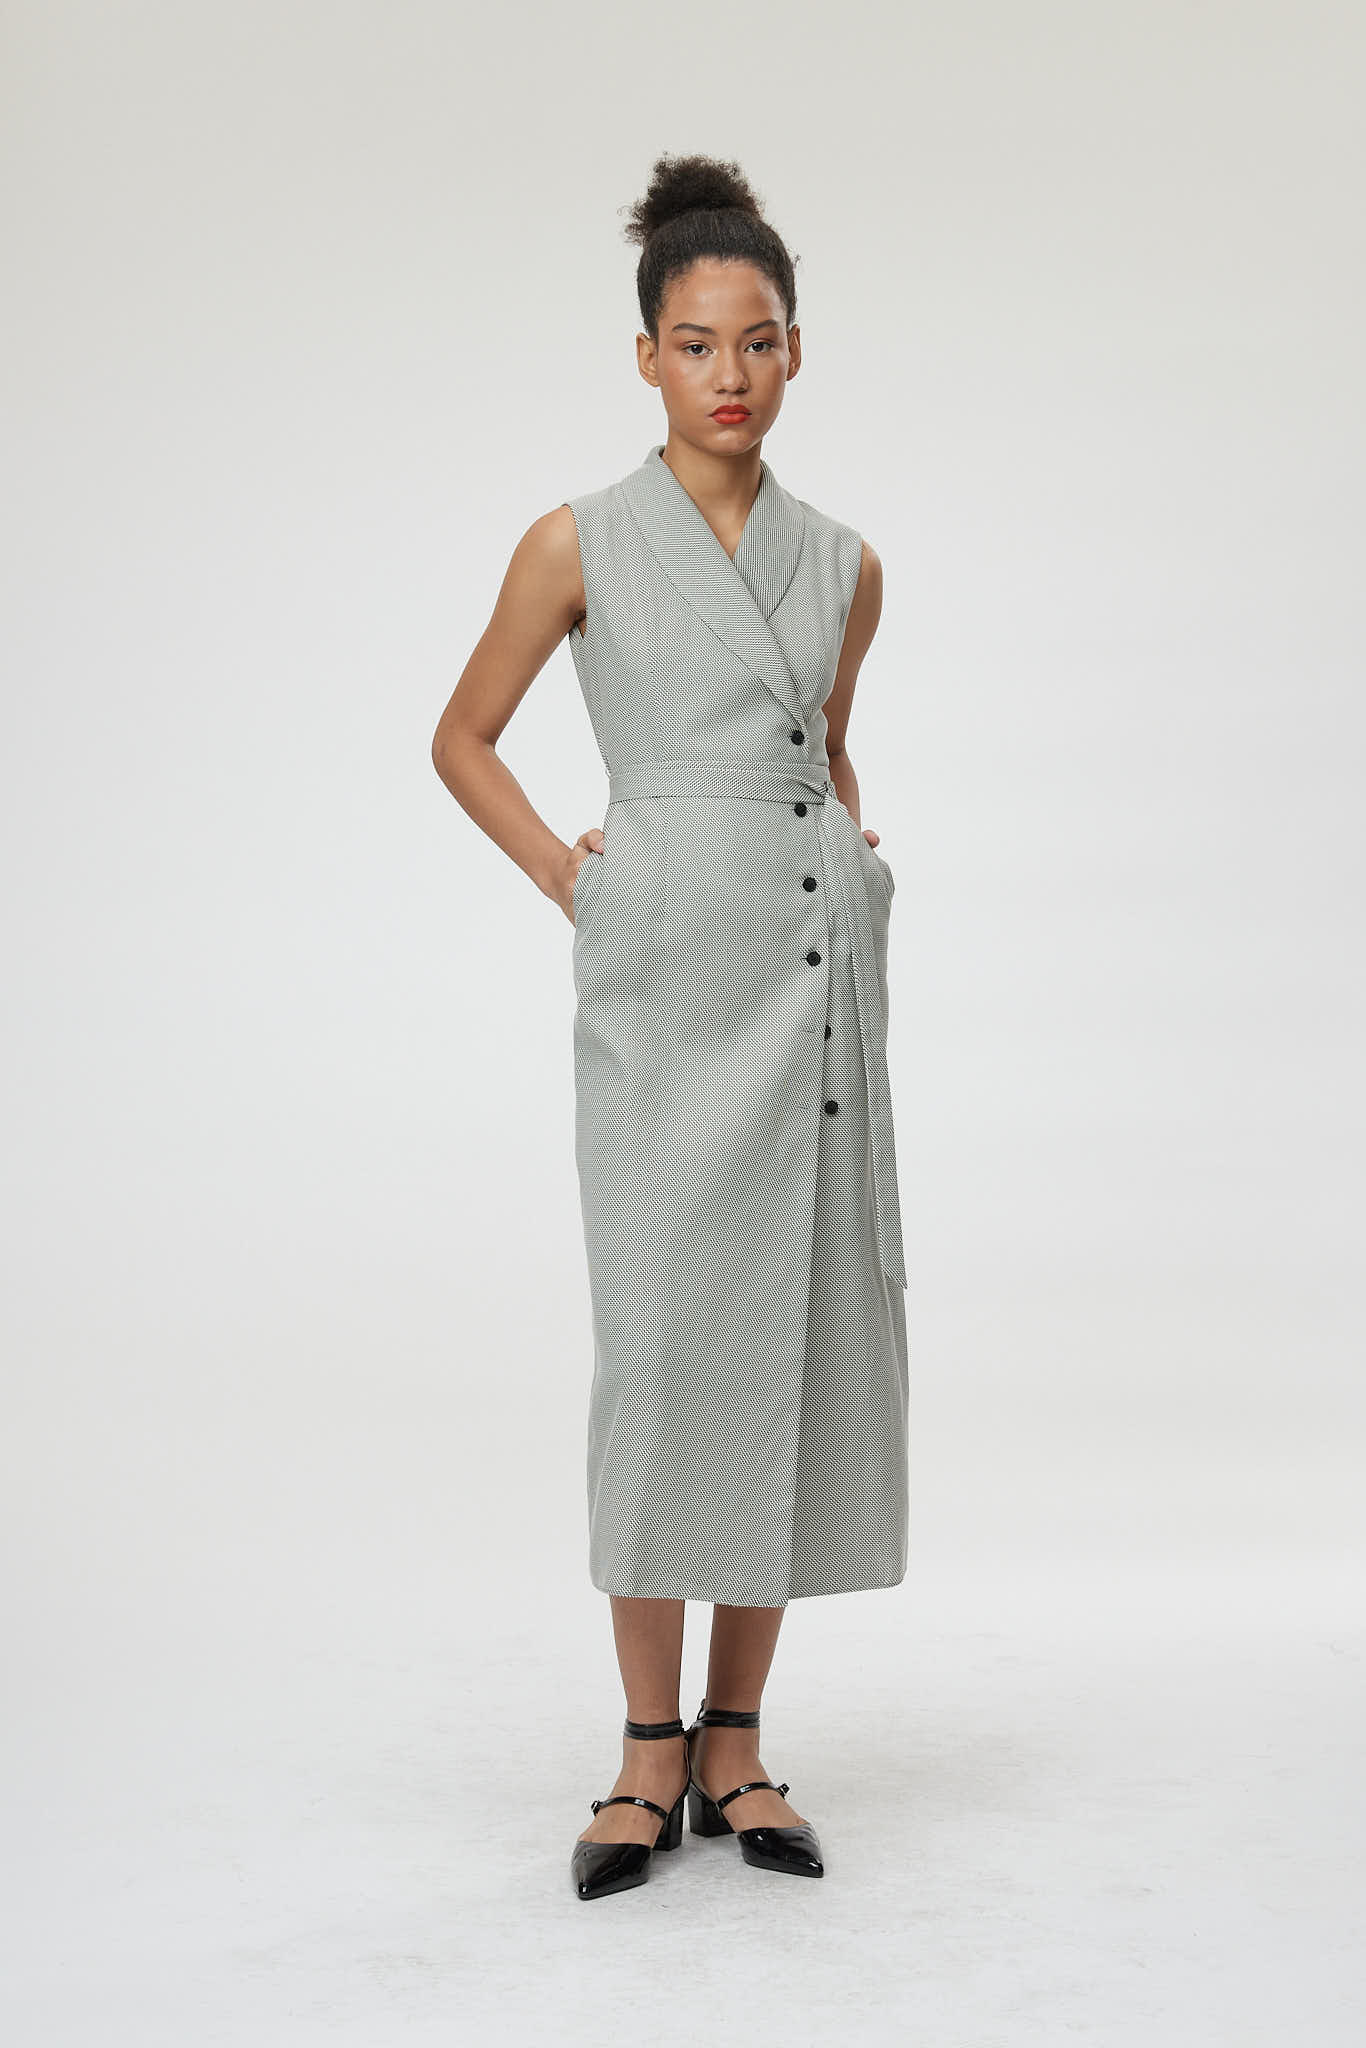 Genoa Dress – Maxi wrap dress in black & white0